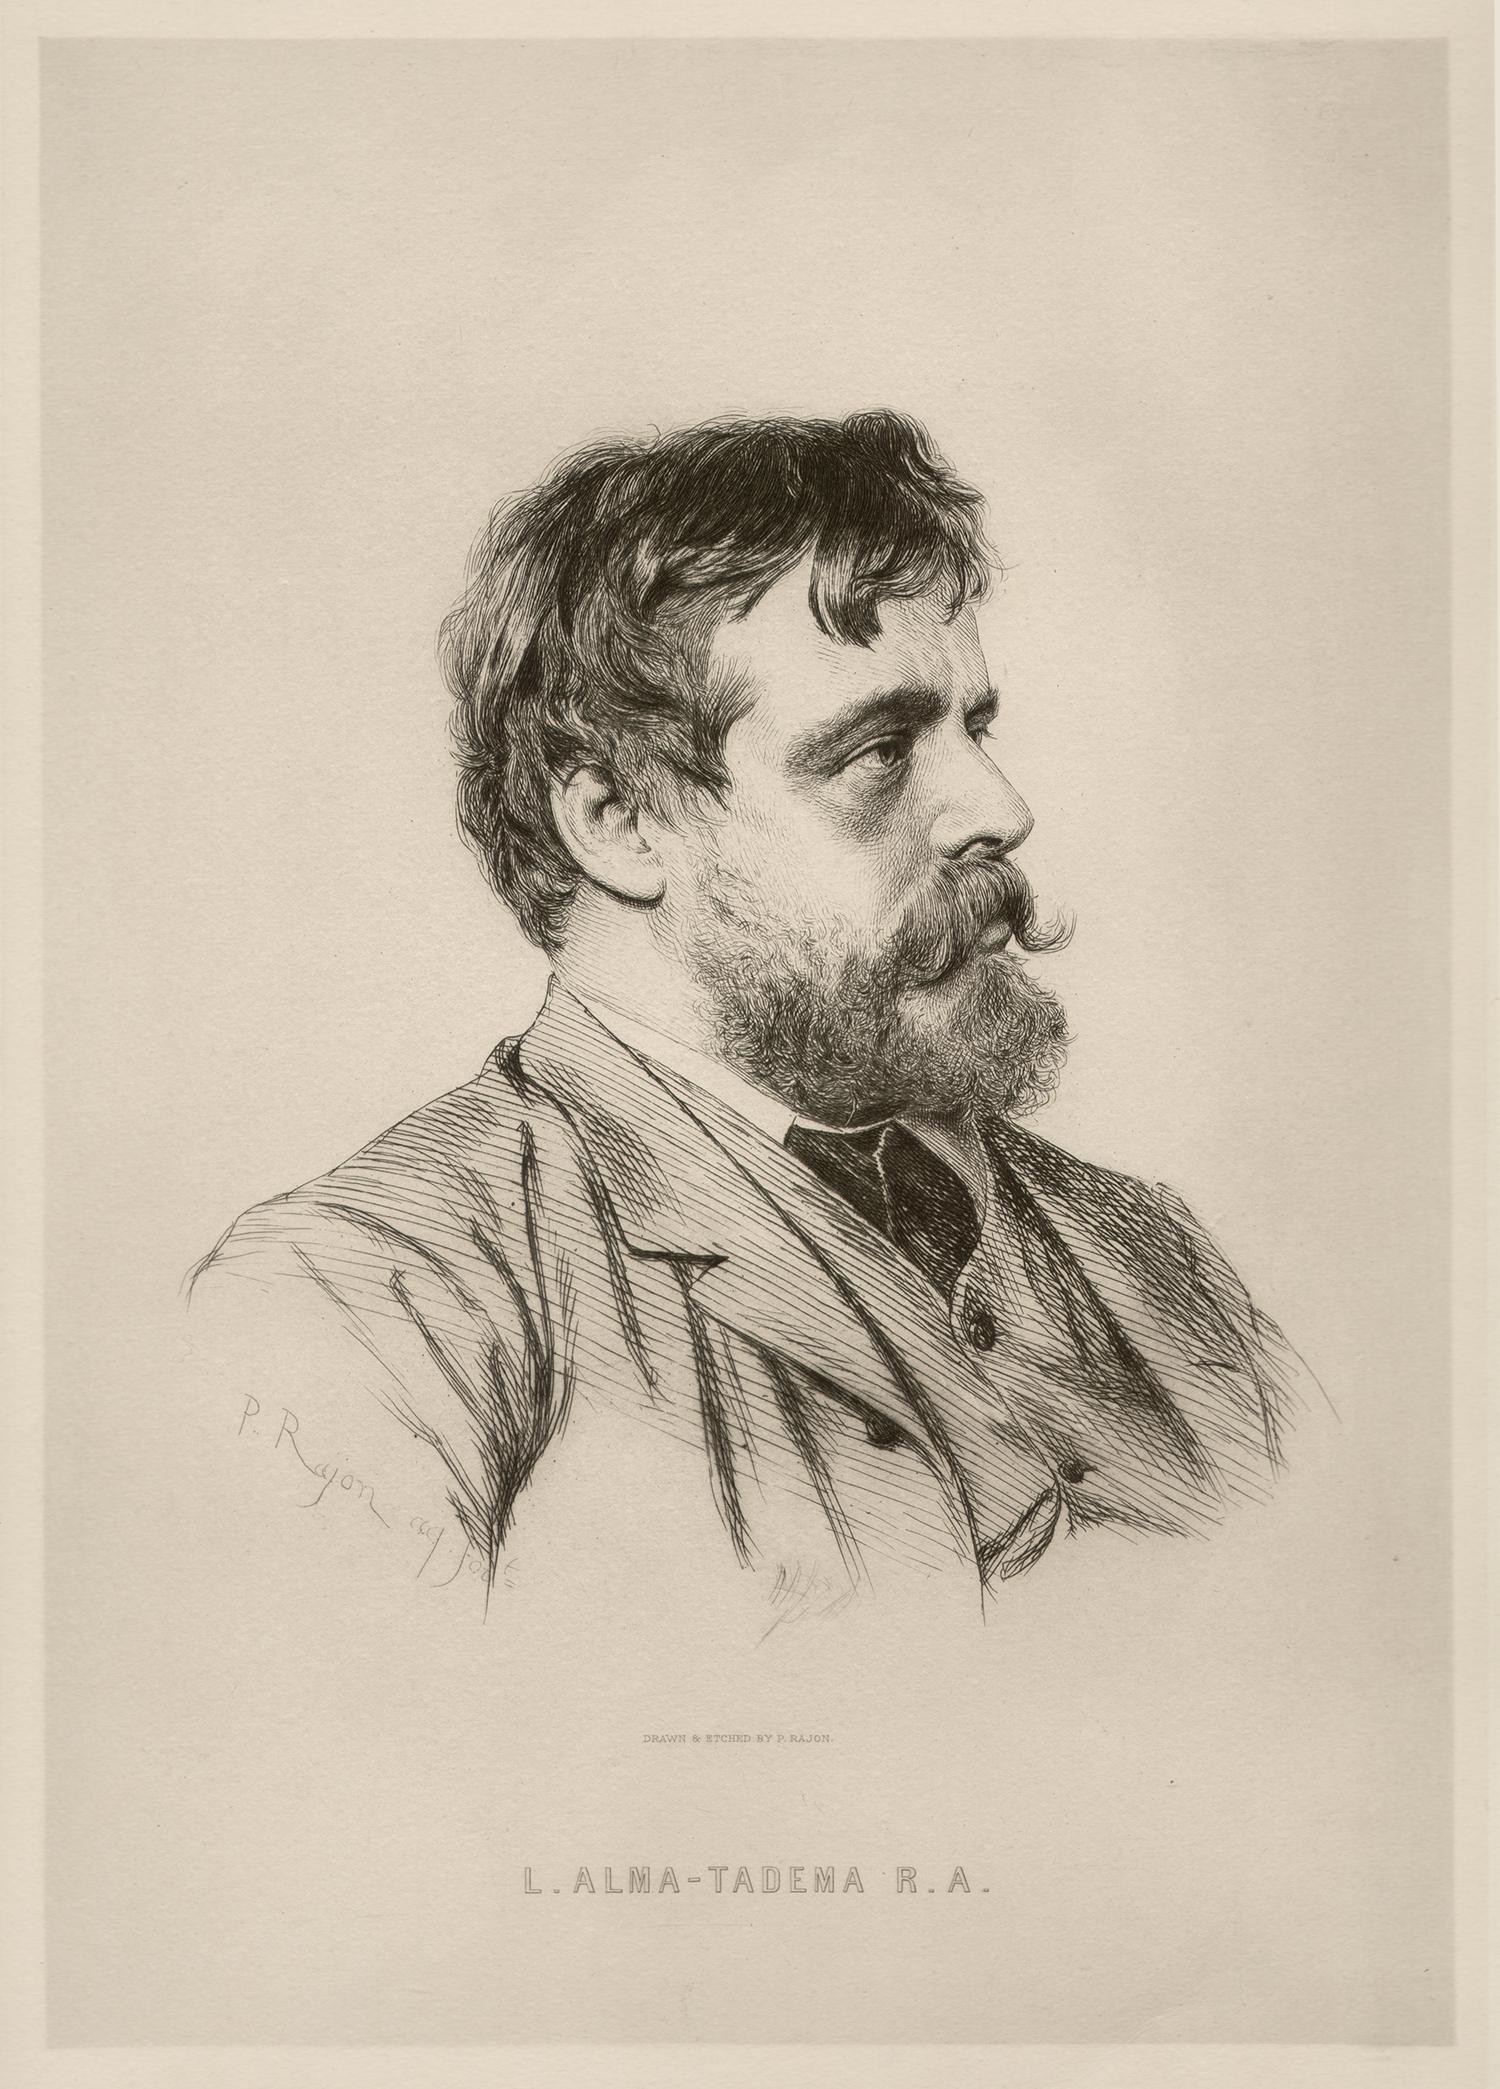 Sir Lawrence Alma-Tadema, präraffaelitisch, Porträt-Radierung von Paul Adolphe Rajon